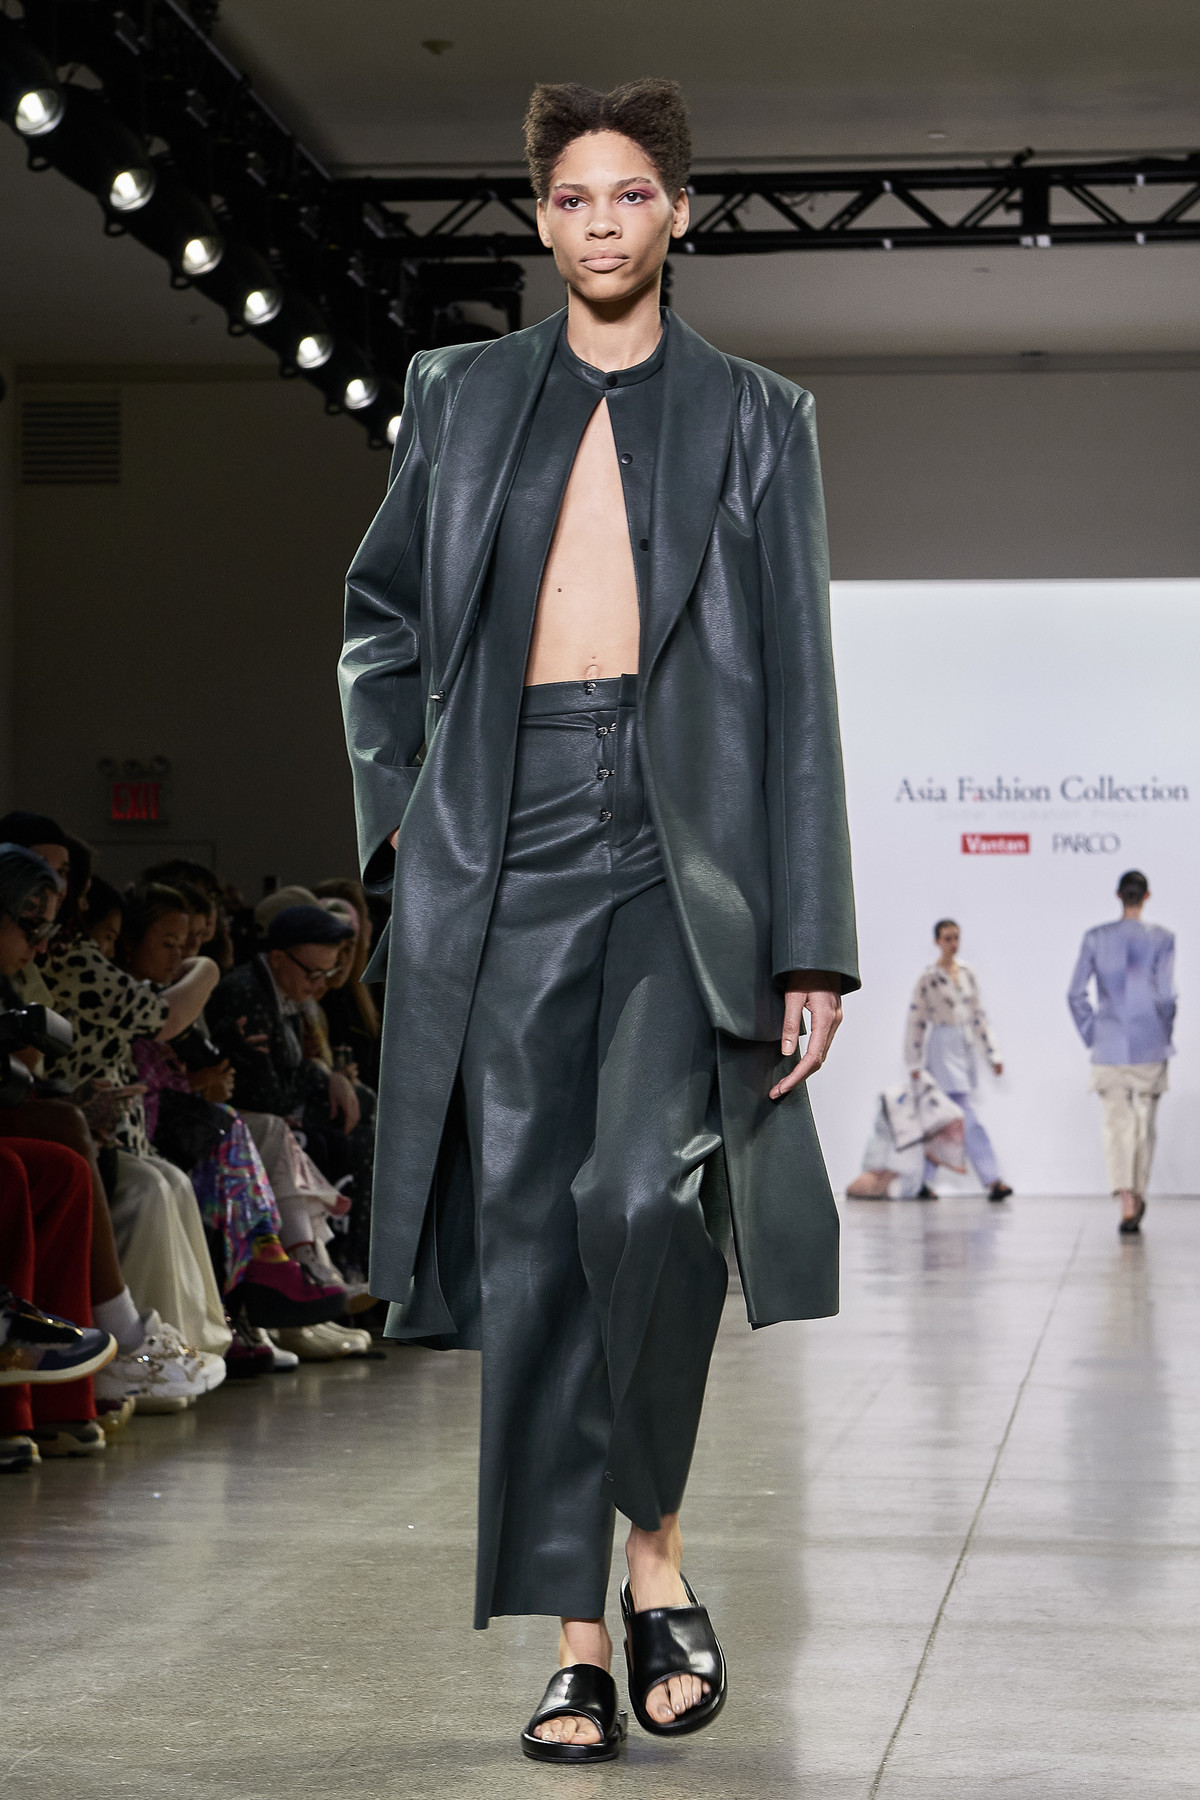 Asia Fashion Collection New York Stage 2020-21 Autumn Winter コレクション